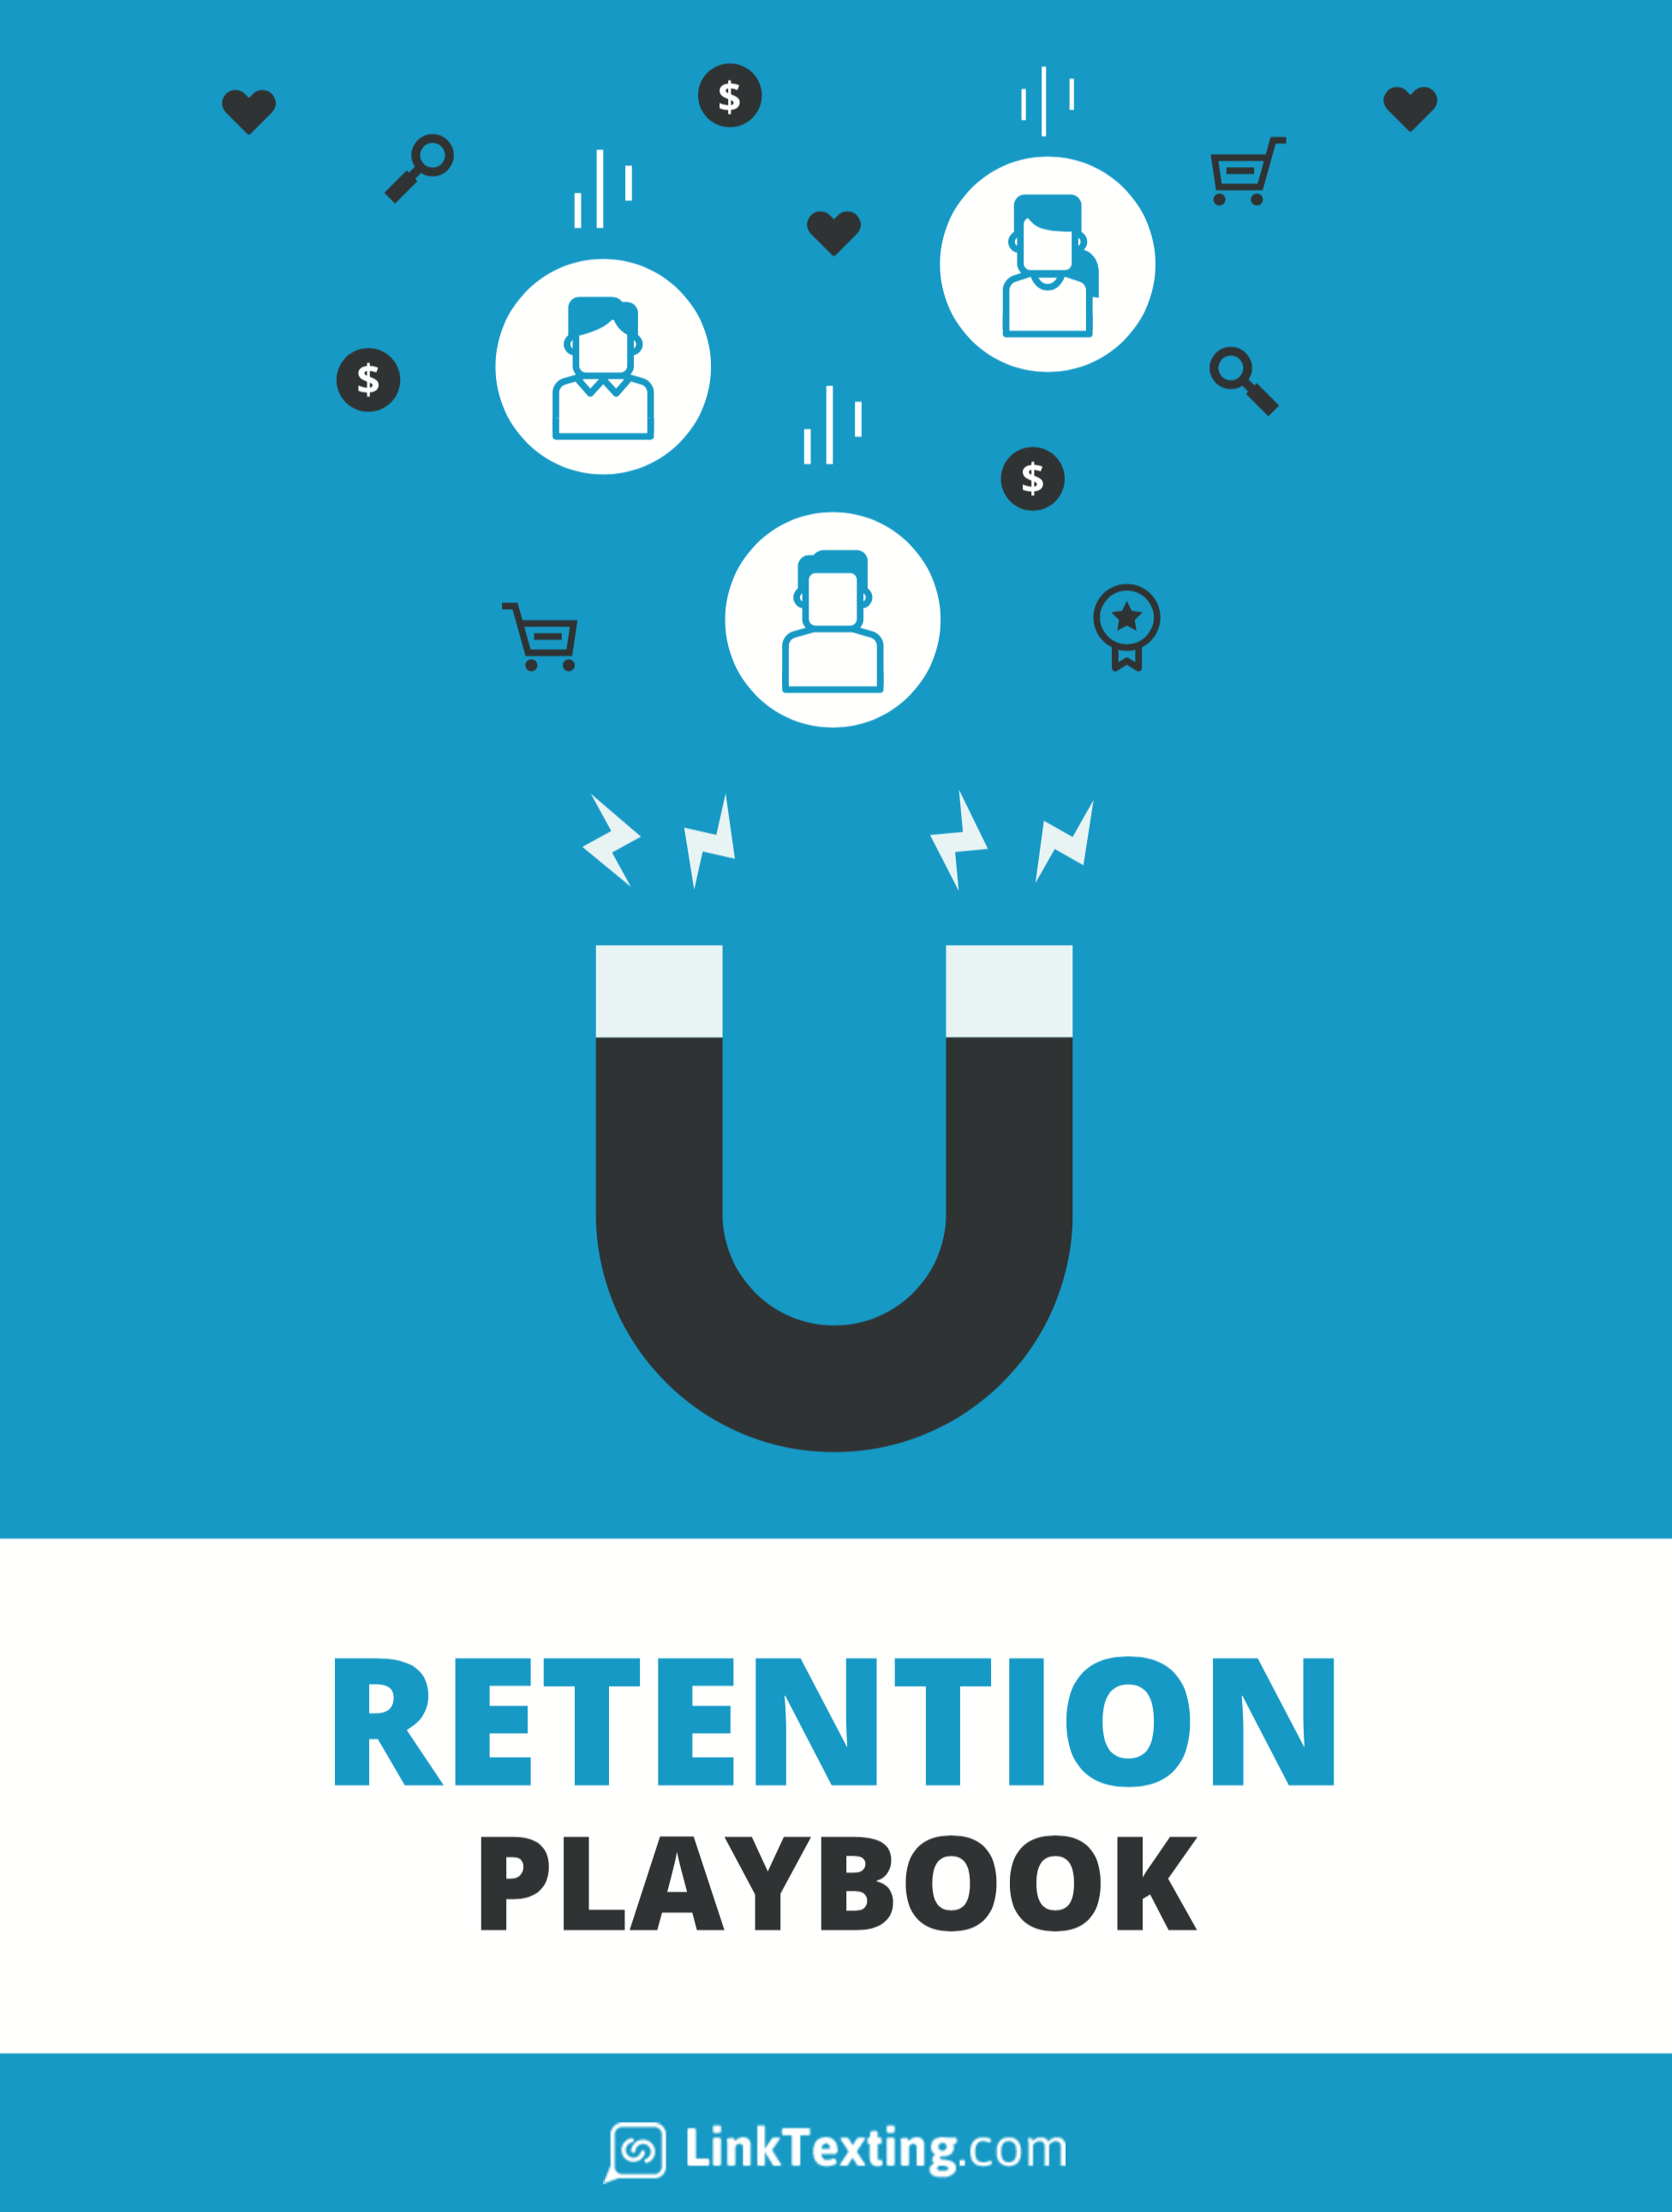 Retention Playbook